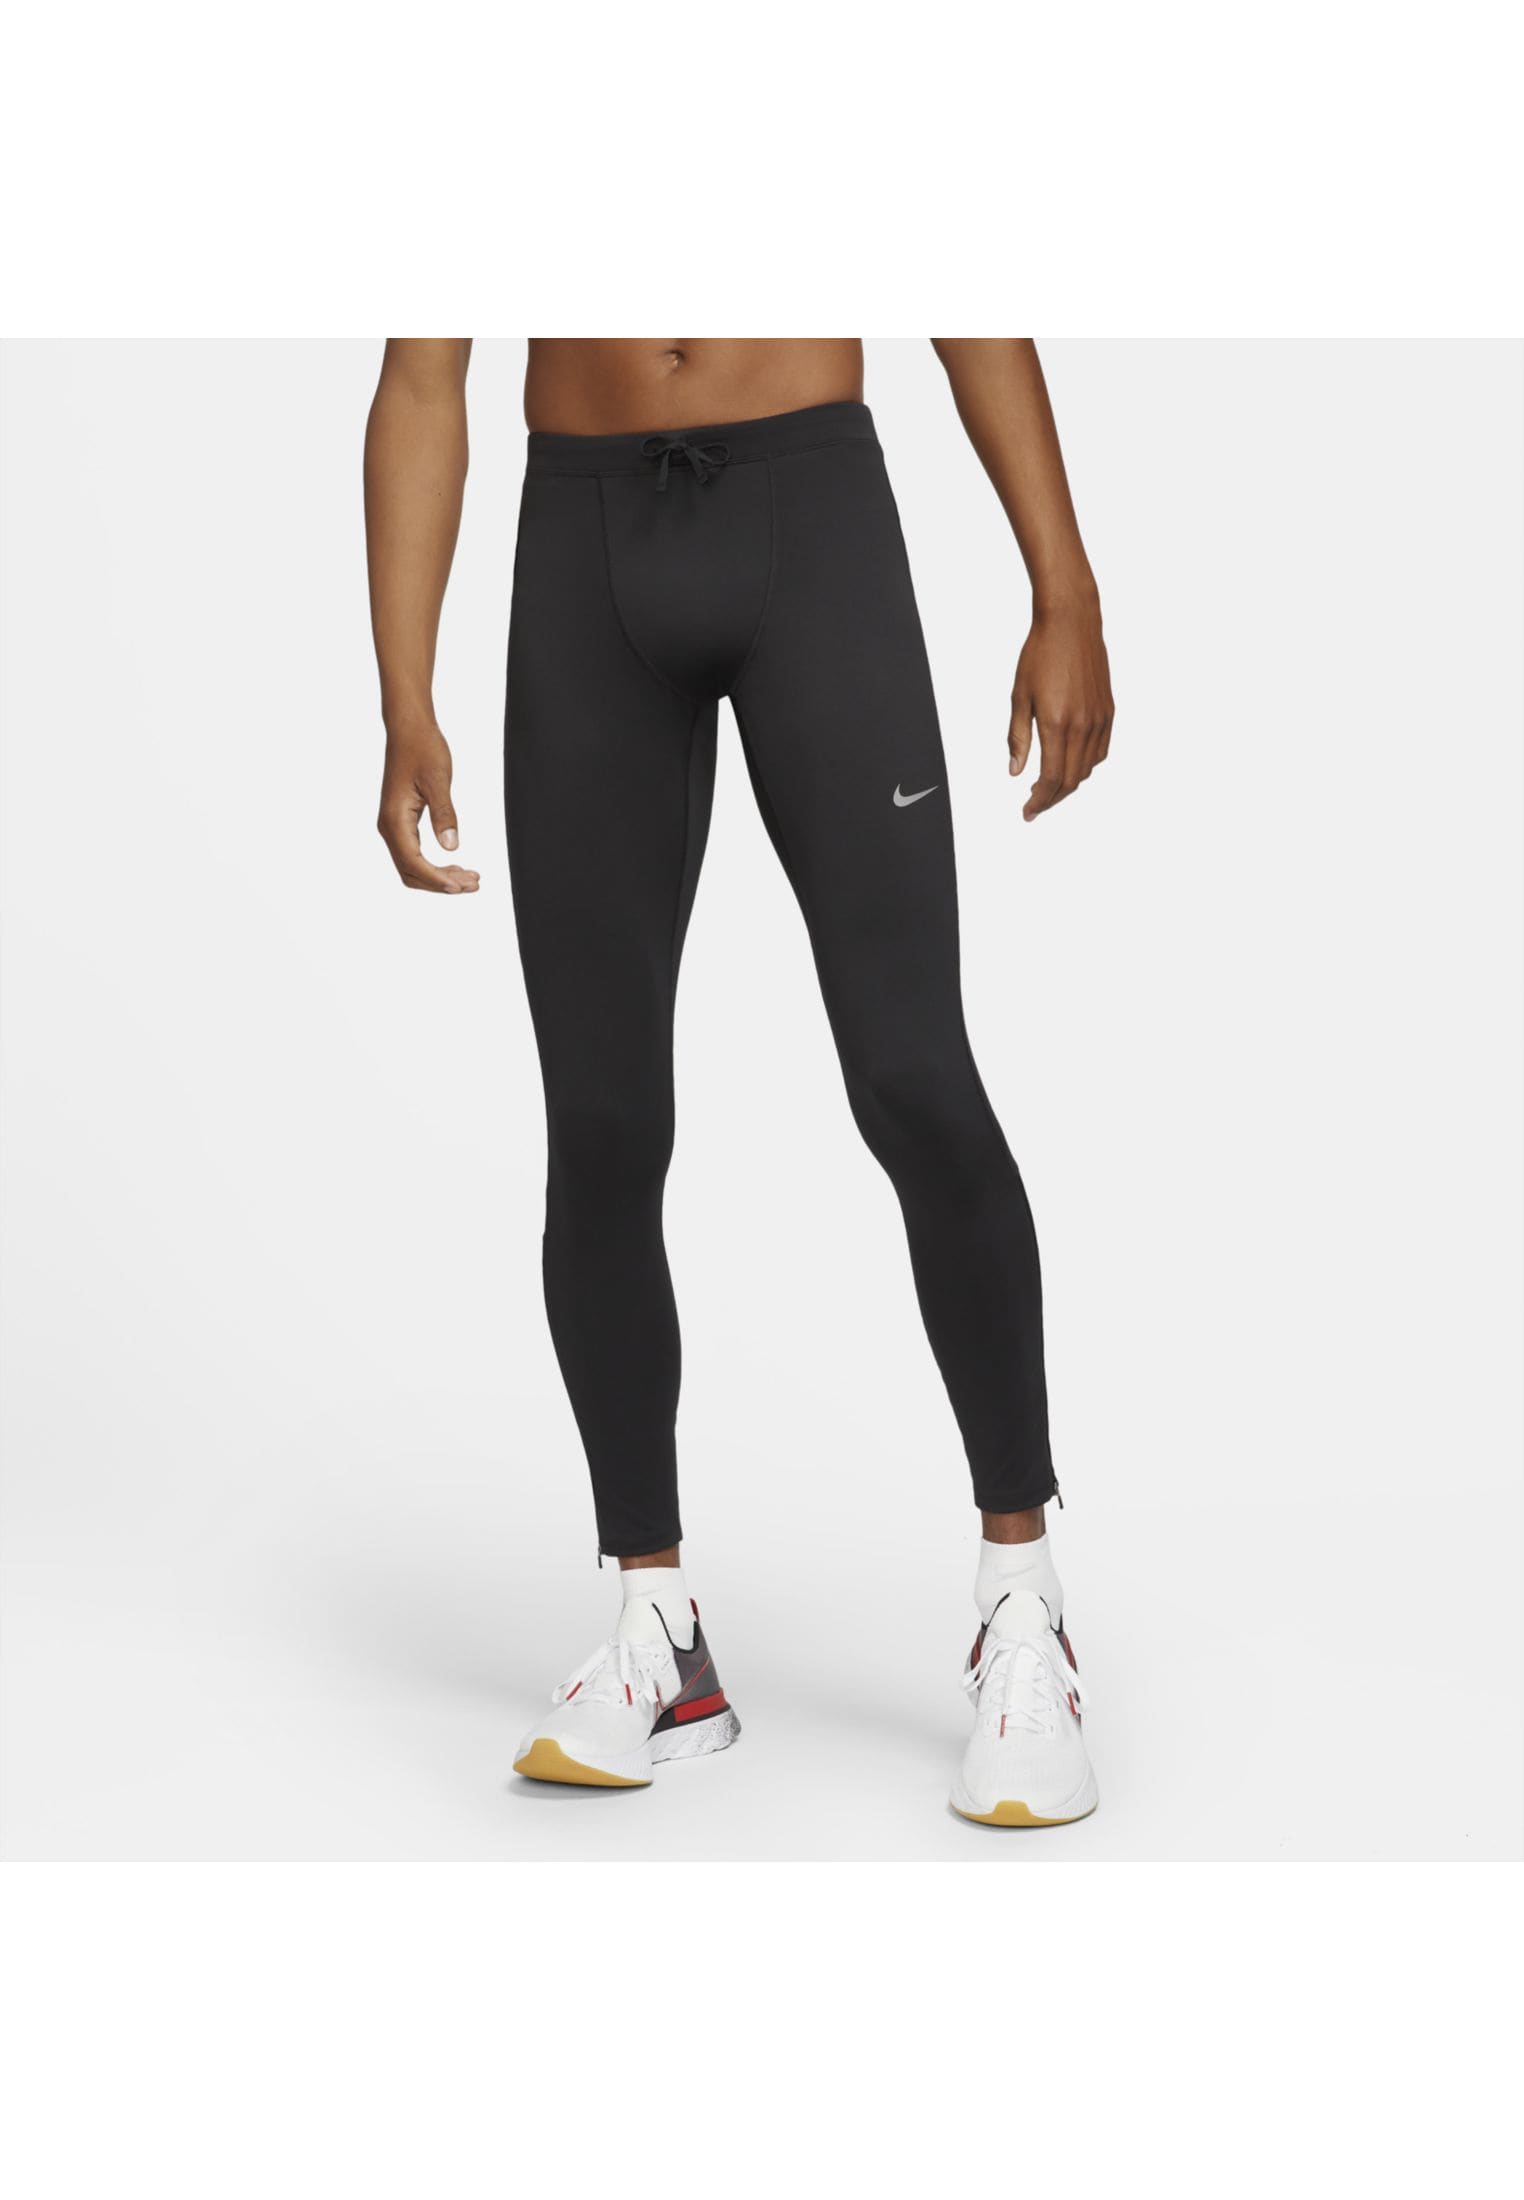 Nike Running Clothing Mens Tights